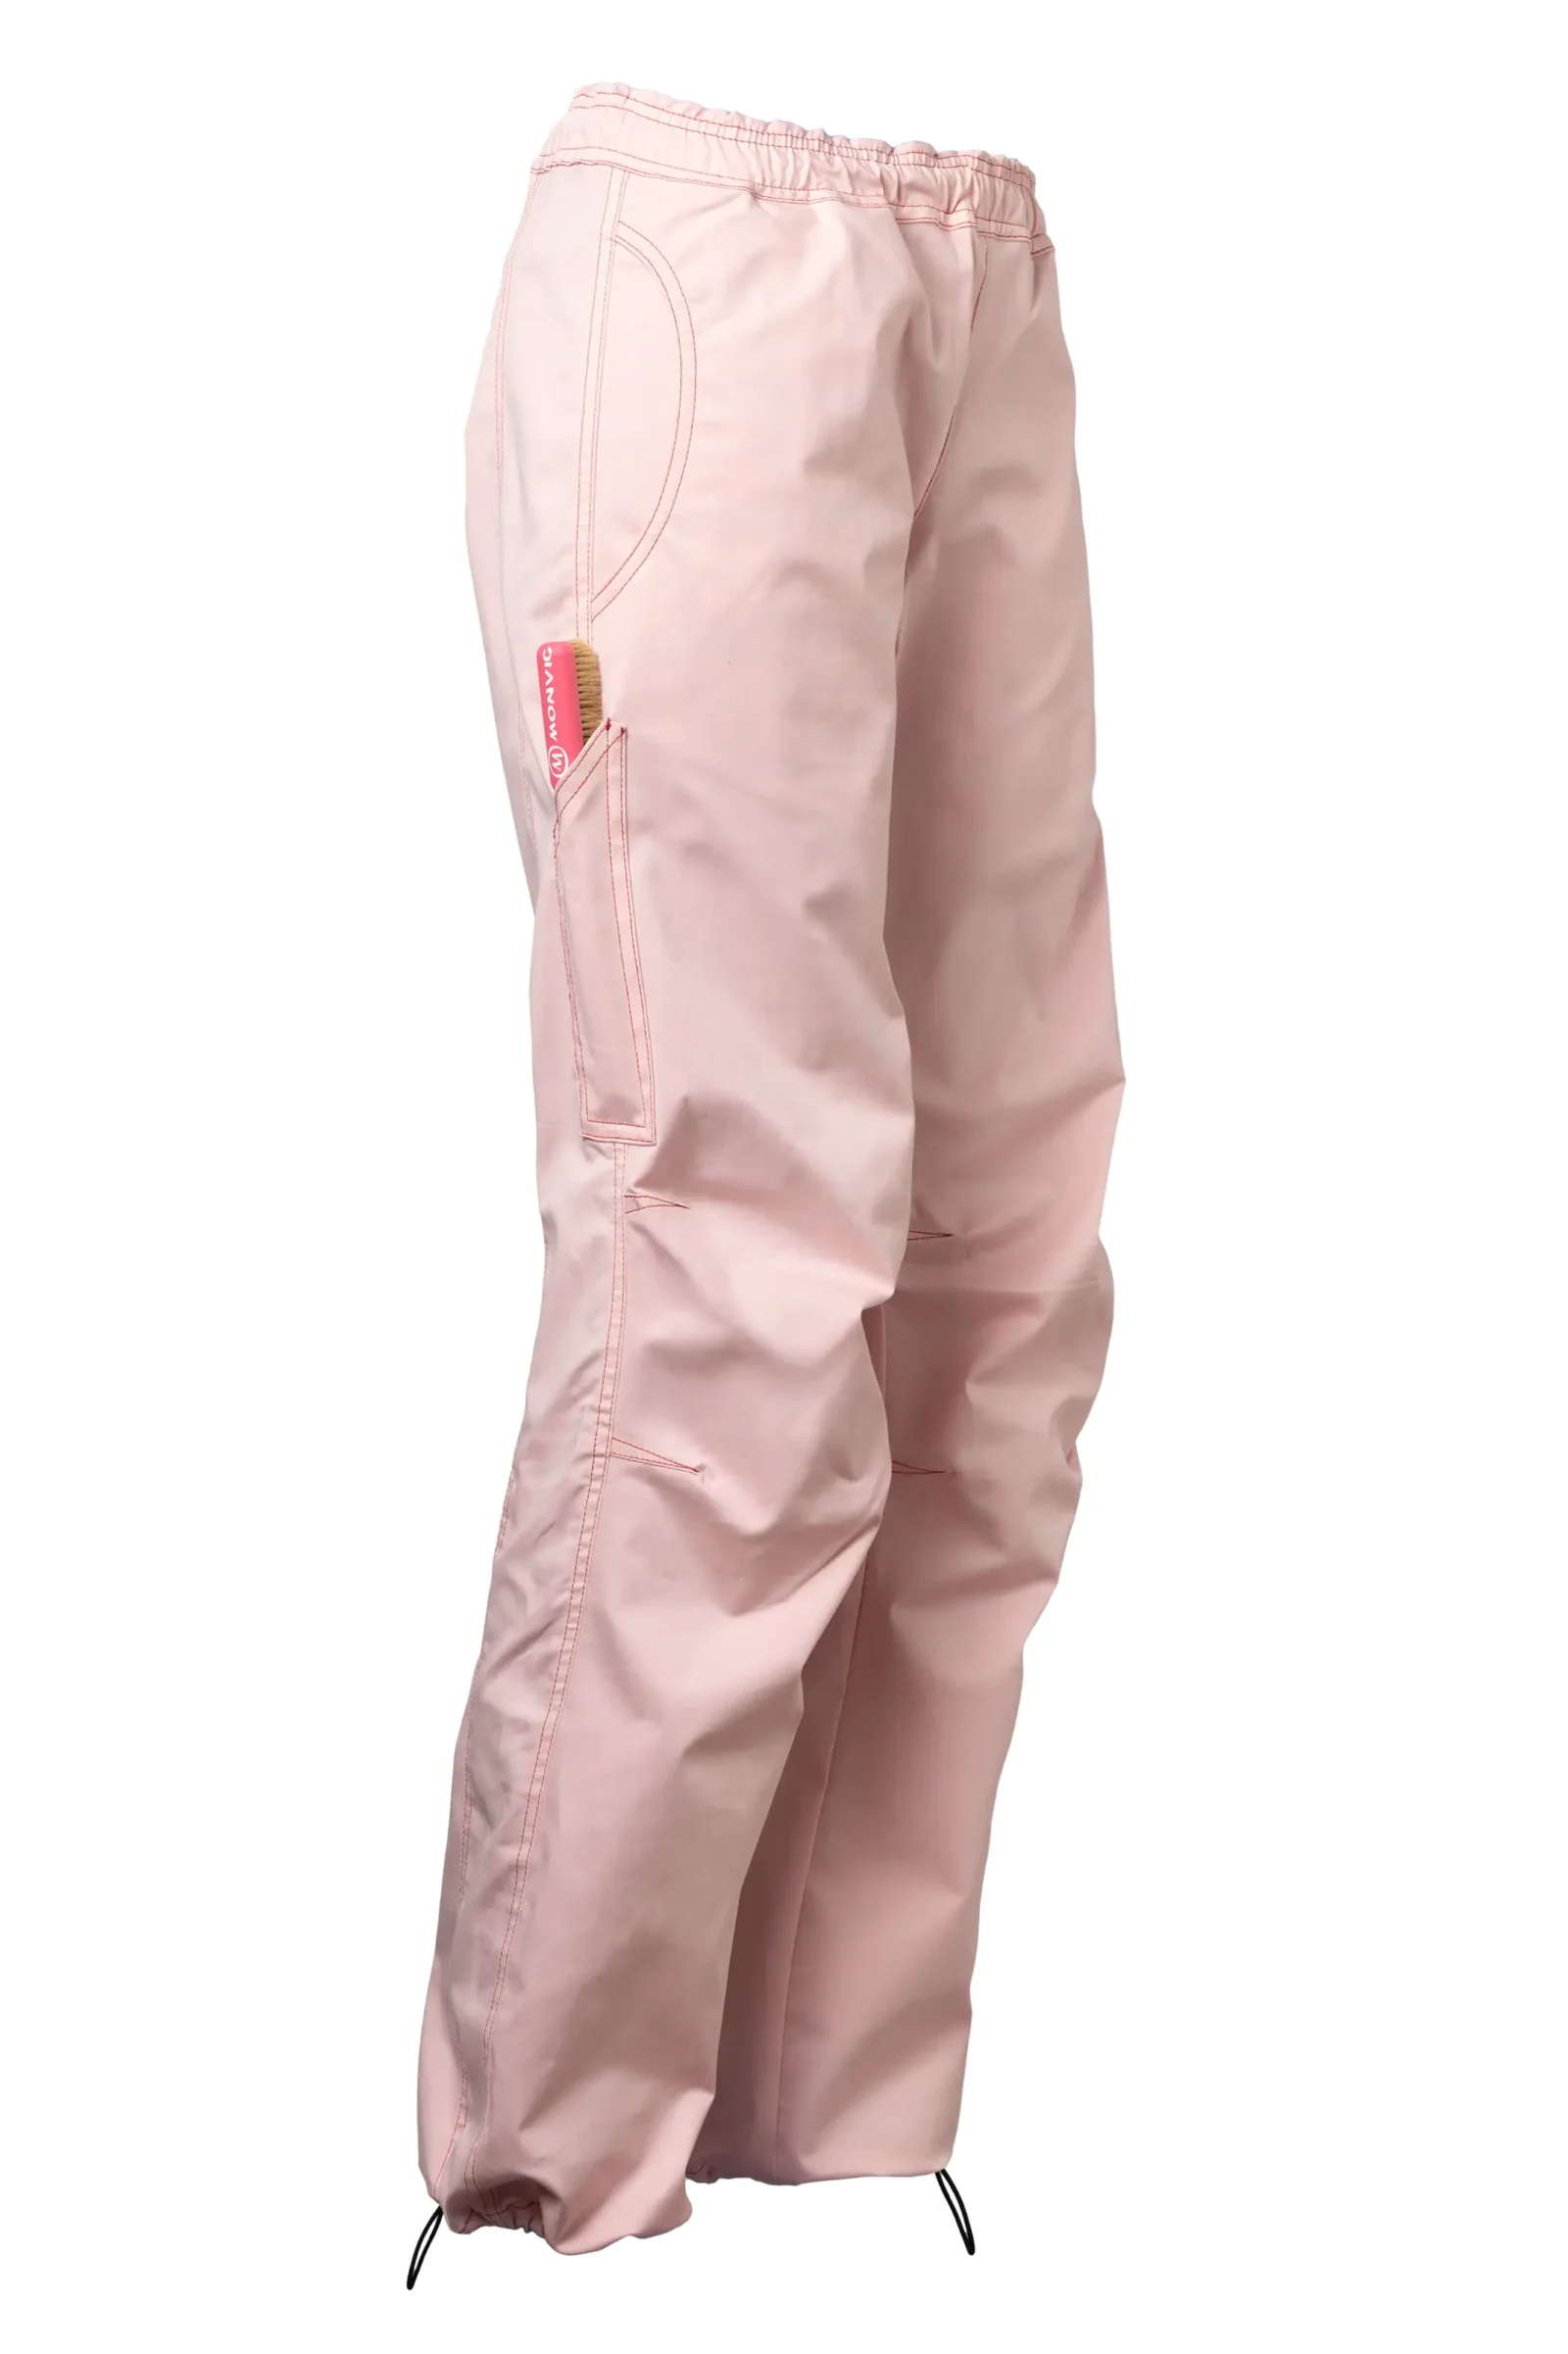 women's sport climbing pants - light pink - stretch cotton - VIOLET MONVIC